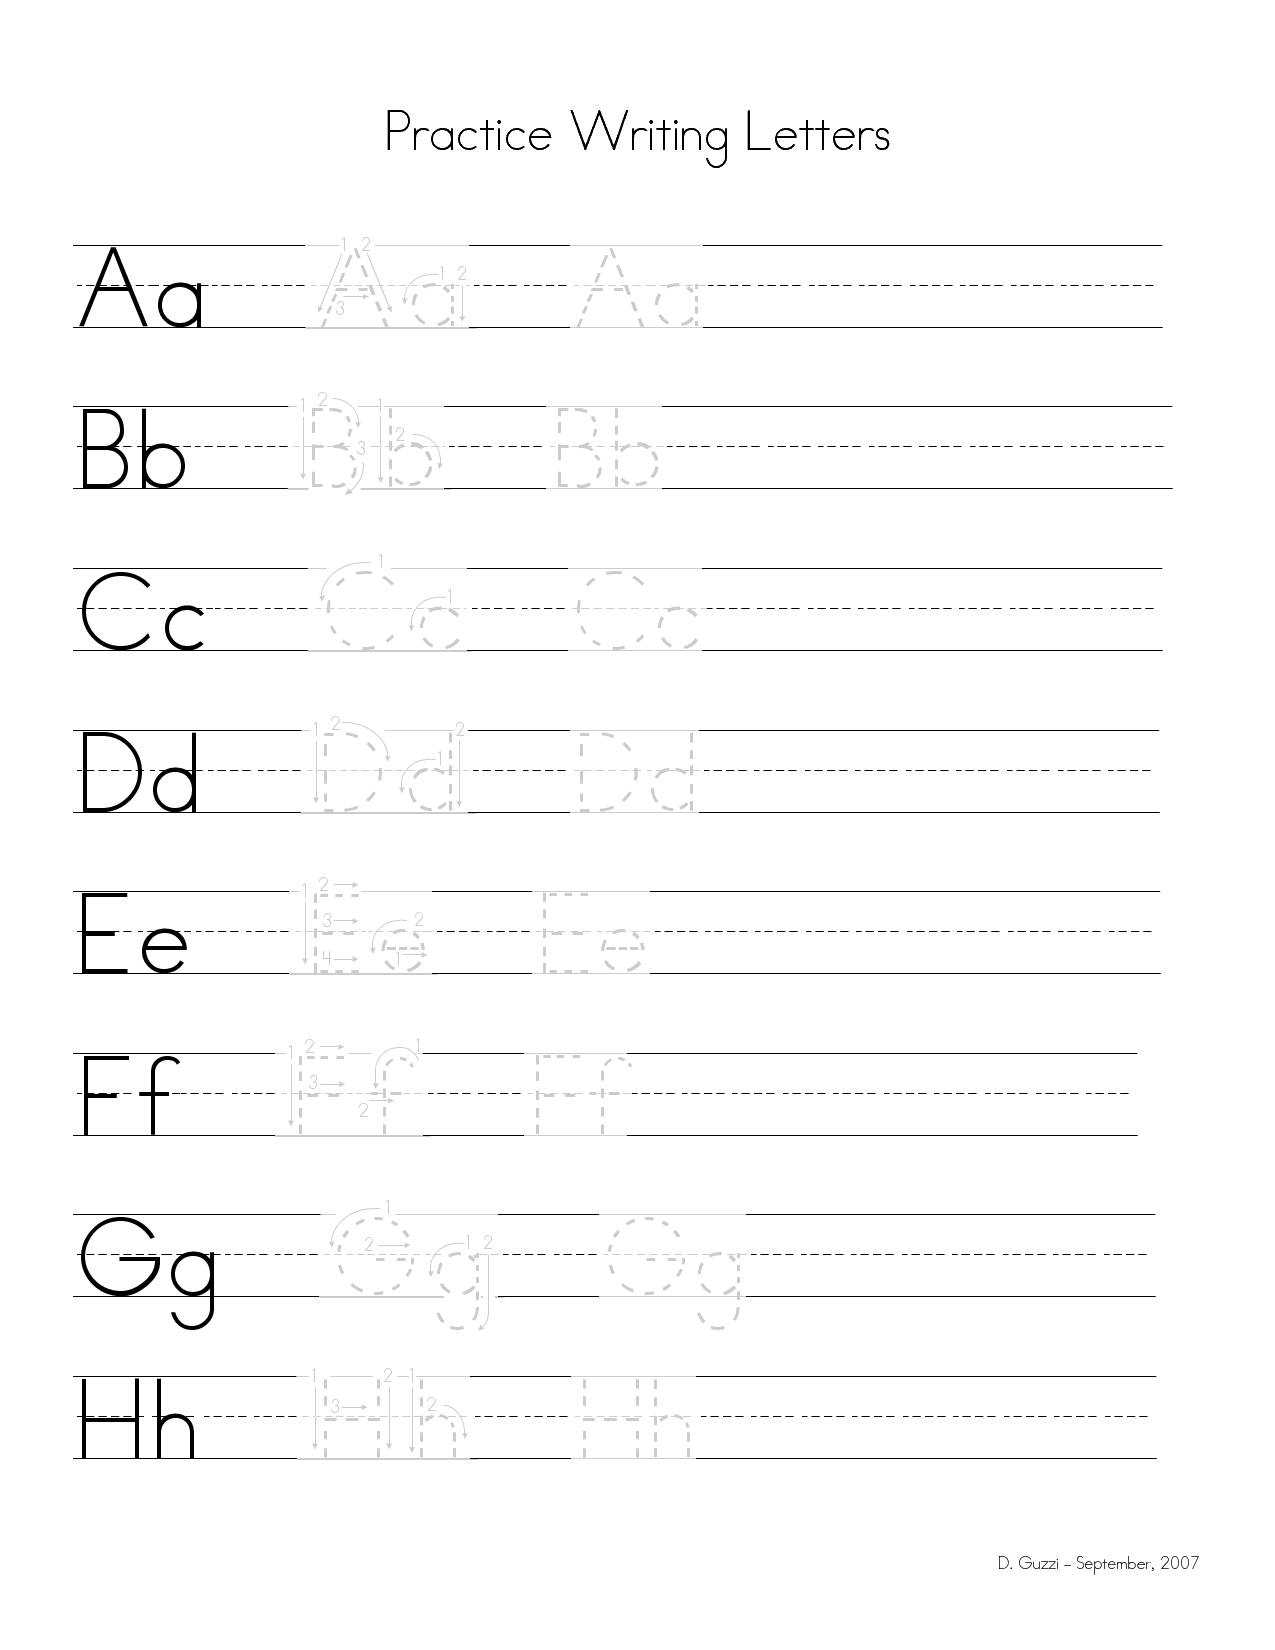 Letter-Writing Alphabet Practice